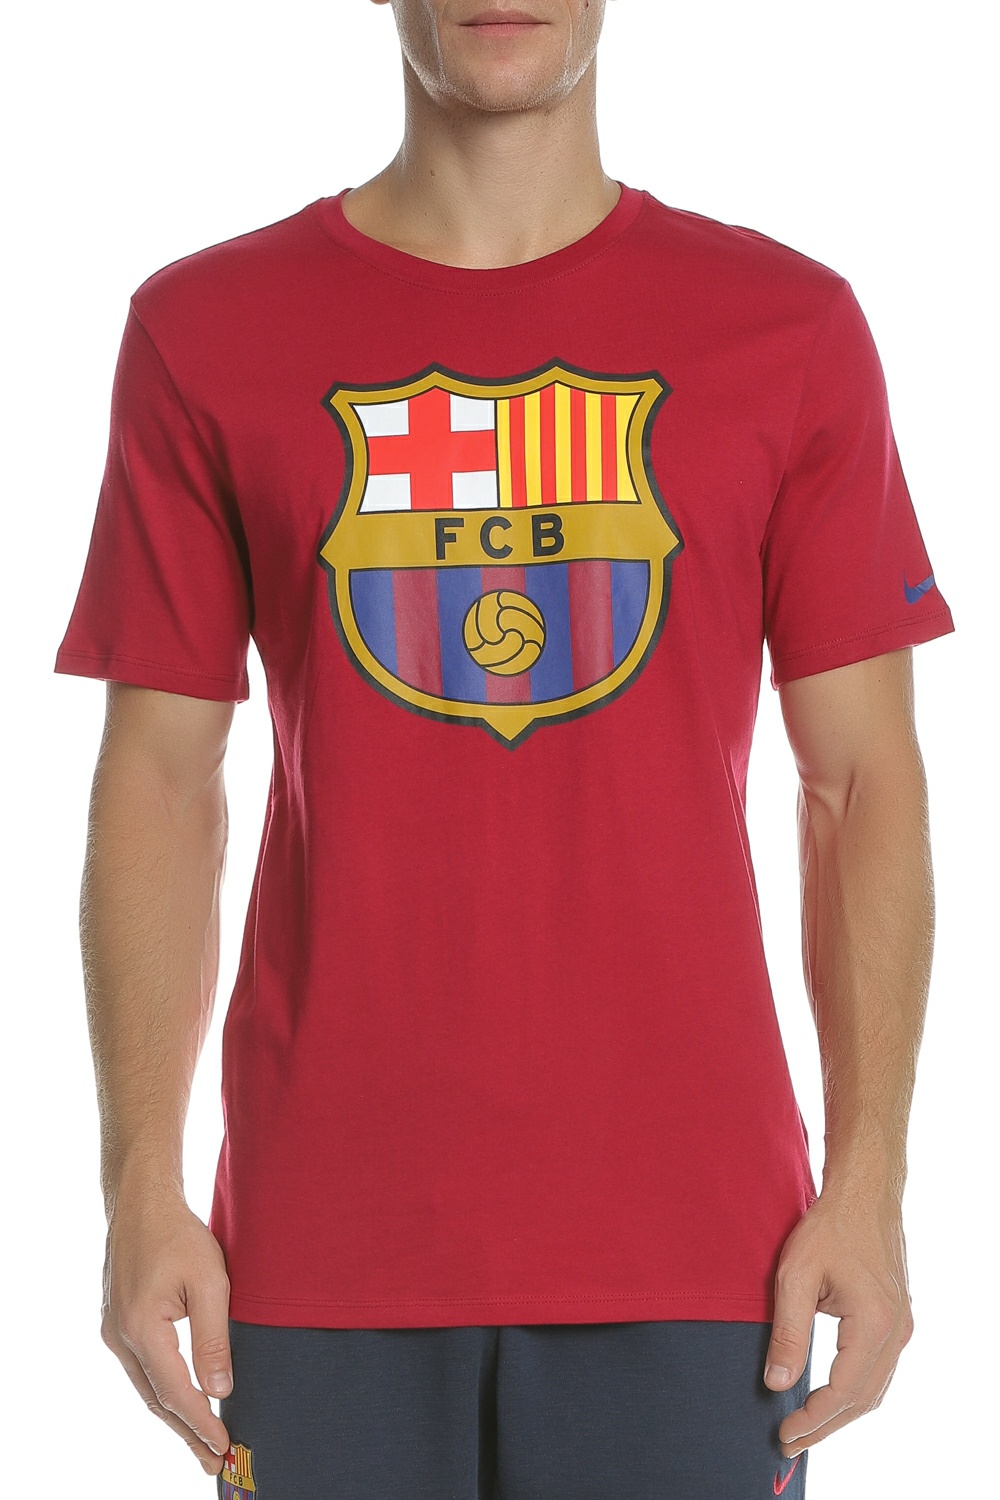 NIKE - Ανδρική μπλούζα NIKE FCB M NK TEE EVERGREEN CREST κόκκινη Ανδρικά/Ρούχα/Αθλητικά/T-shirt